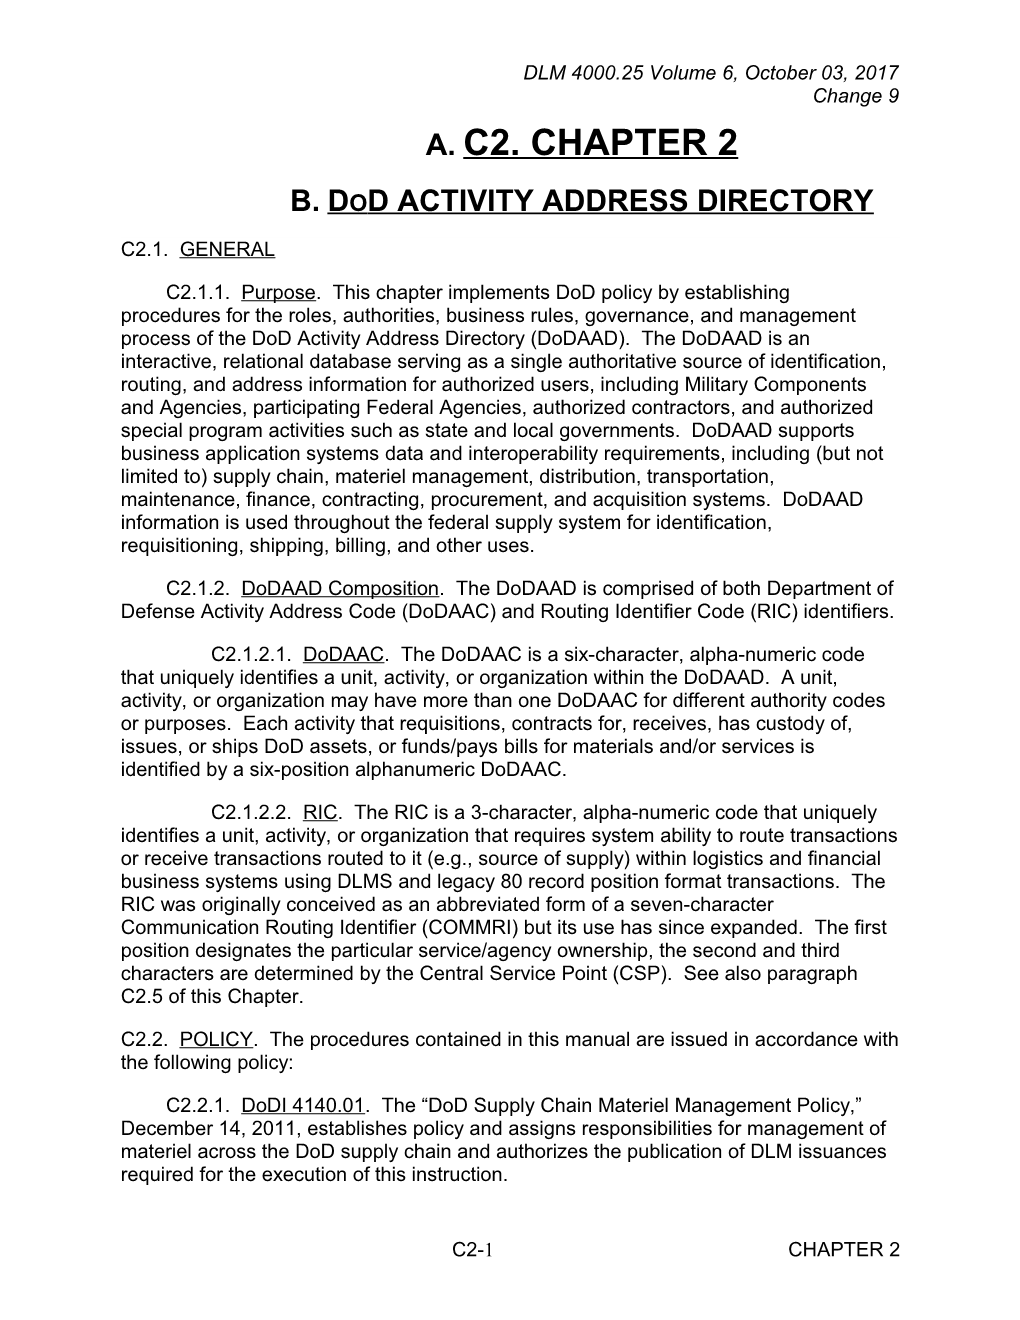 Chapter 2 - Dod Activity Address Code (Dodaad)